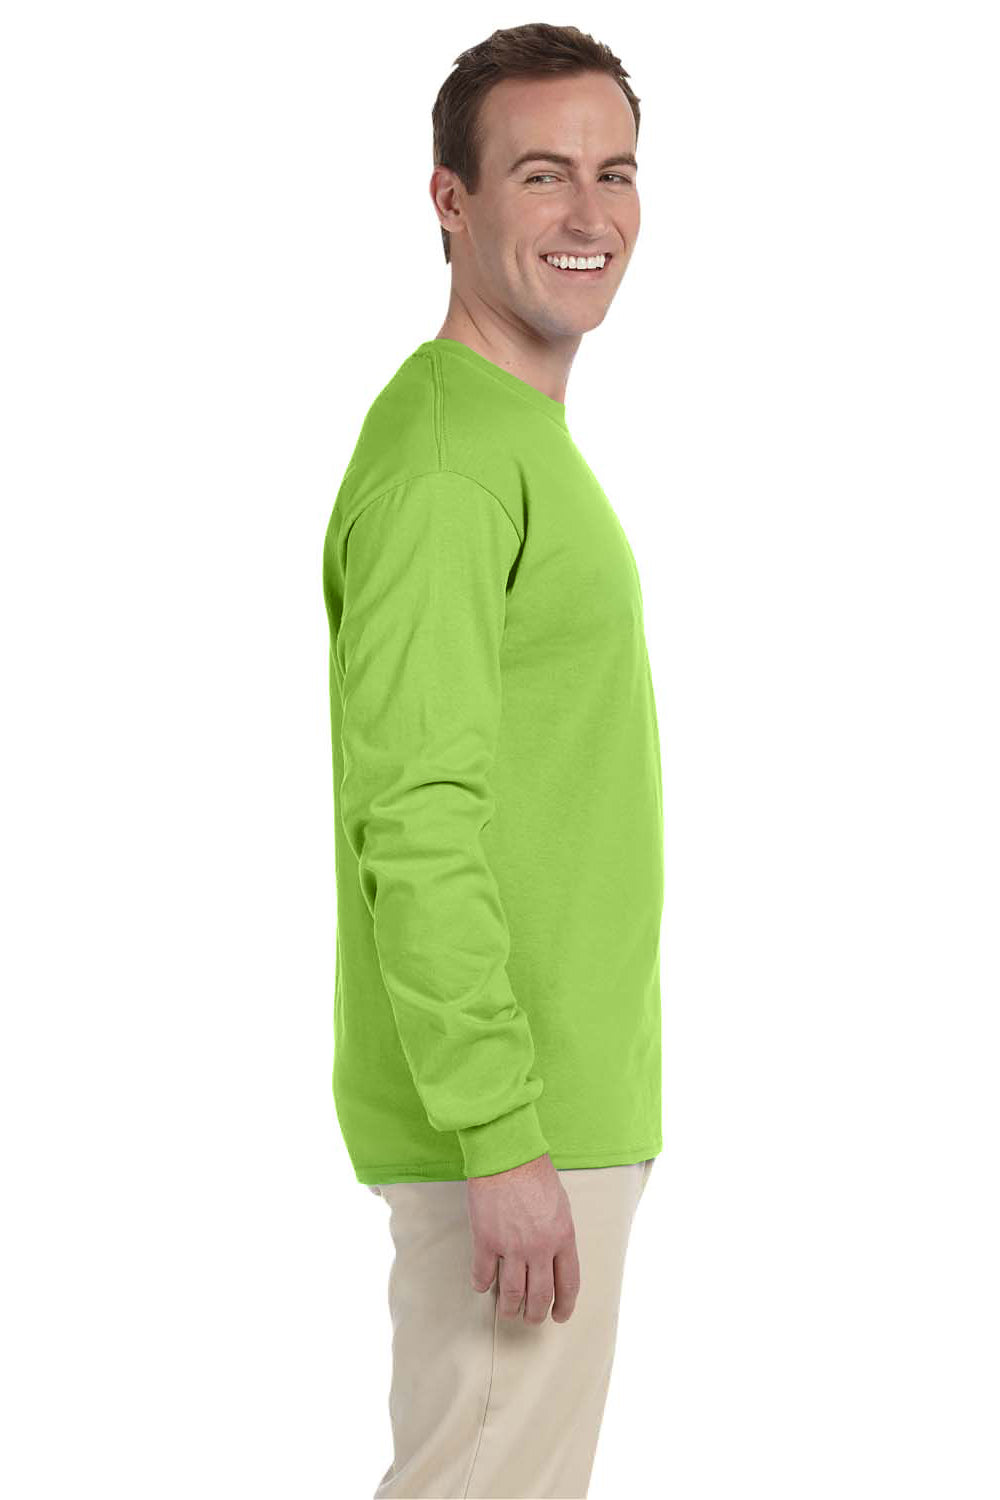 Fruit Of The Loom 4930 Mens HD Jersey Long Sleeve Crewneck T-Shirt Neon Green Side